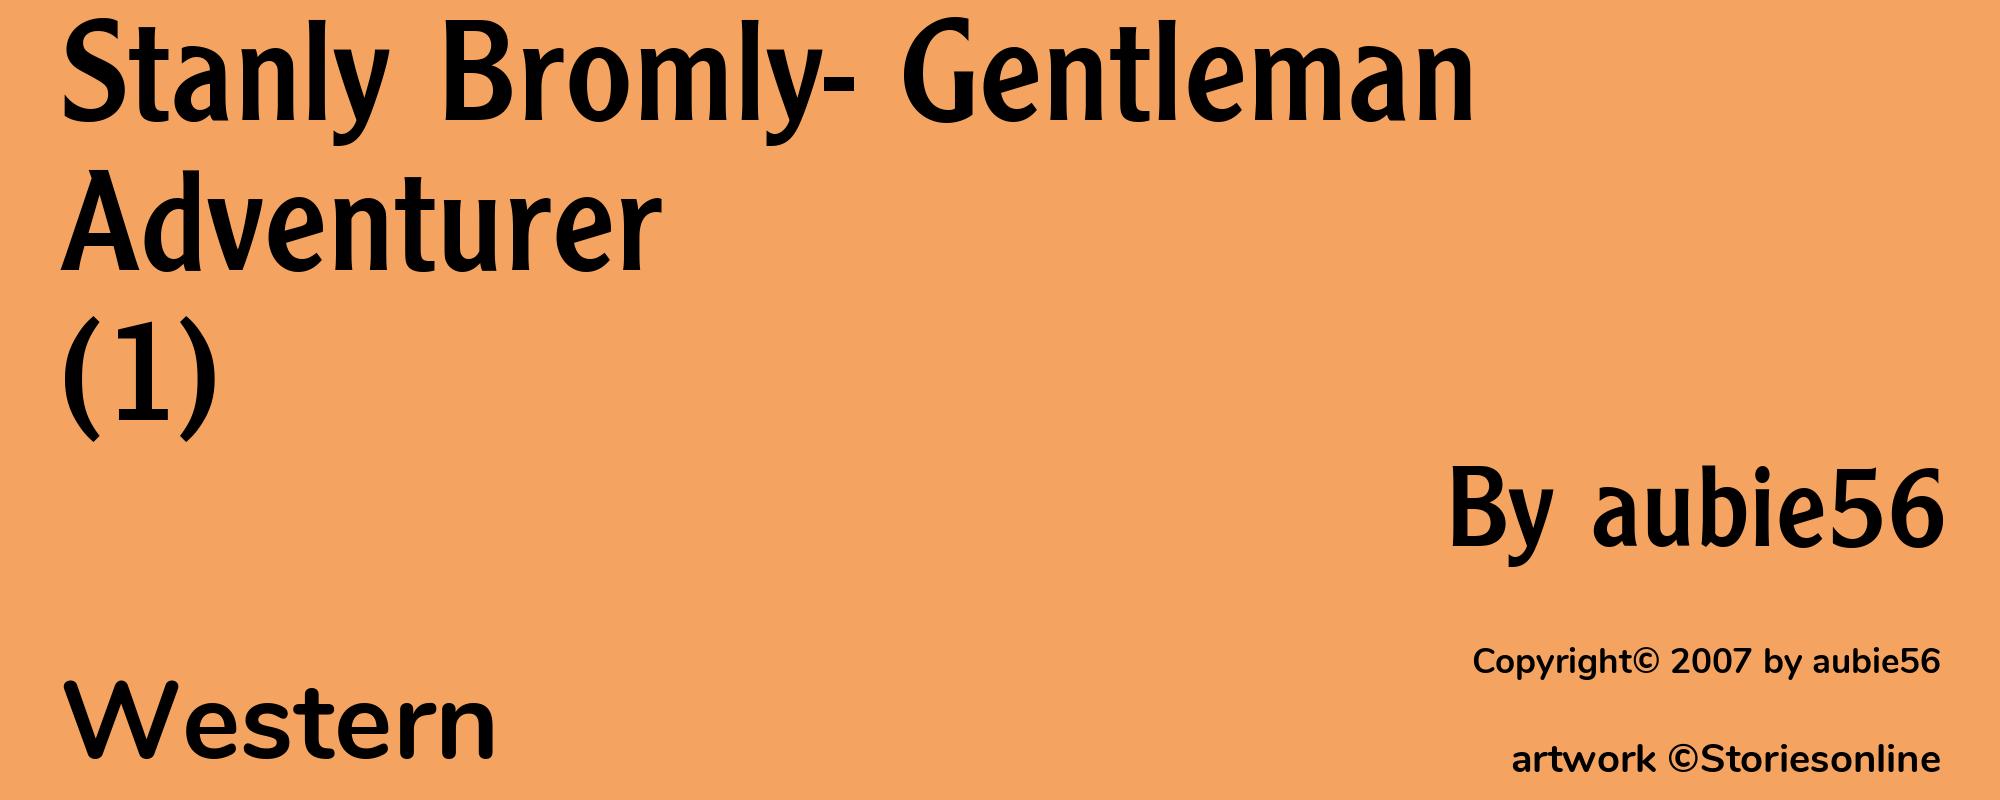 Stanly Bromly- Gentleman Adventurer(1) - Cover